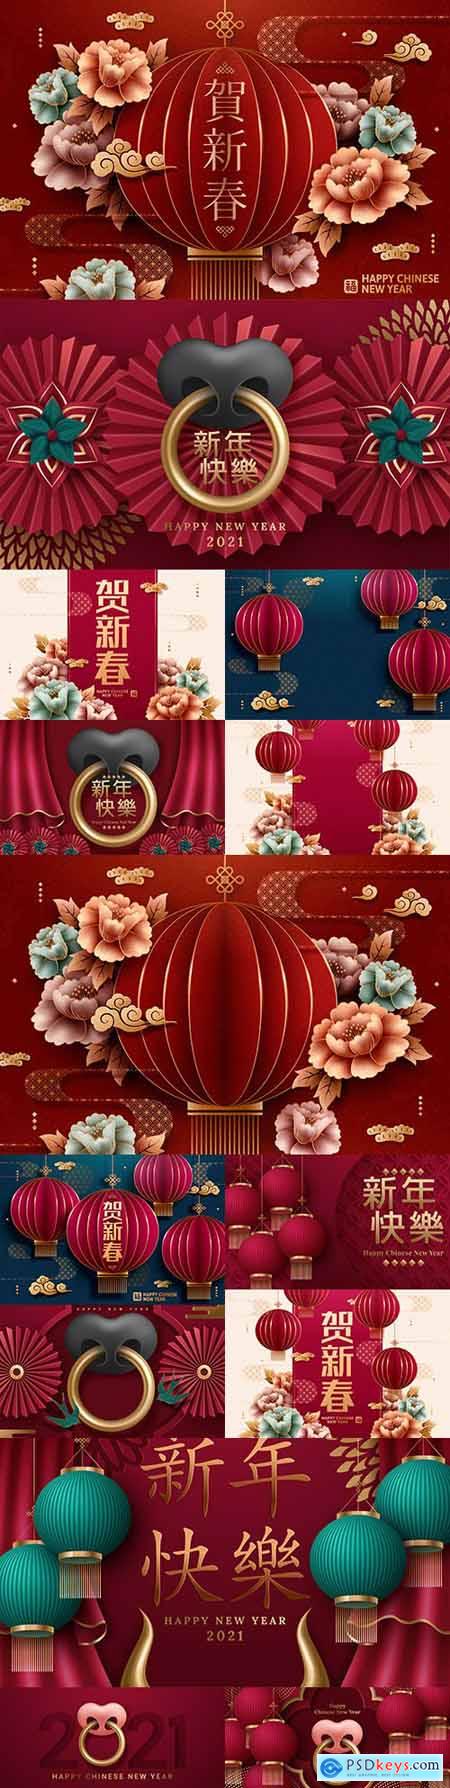 Happy Chinese New Year 2021 flower decorative design